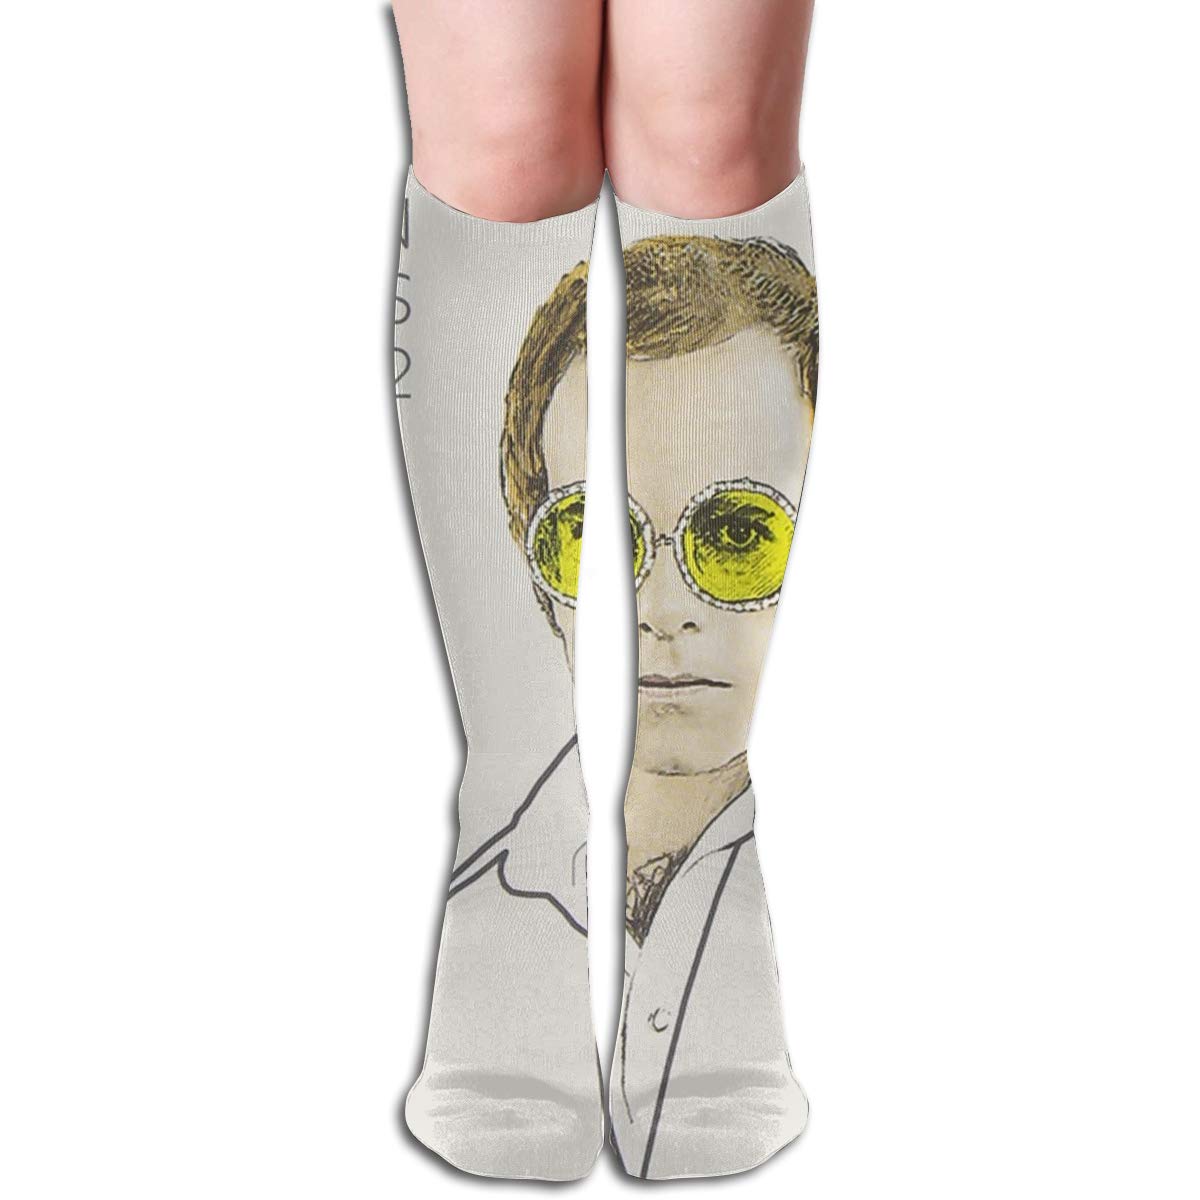 knee-high-socks-featuring-Elton-John